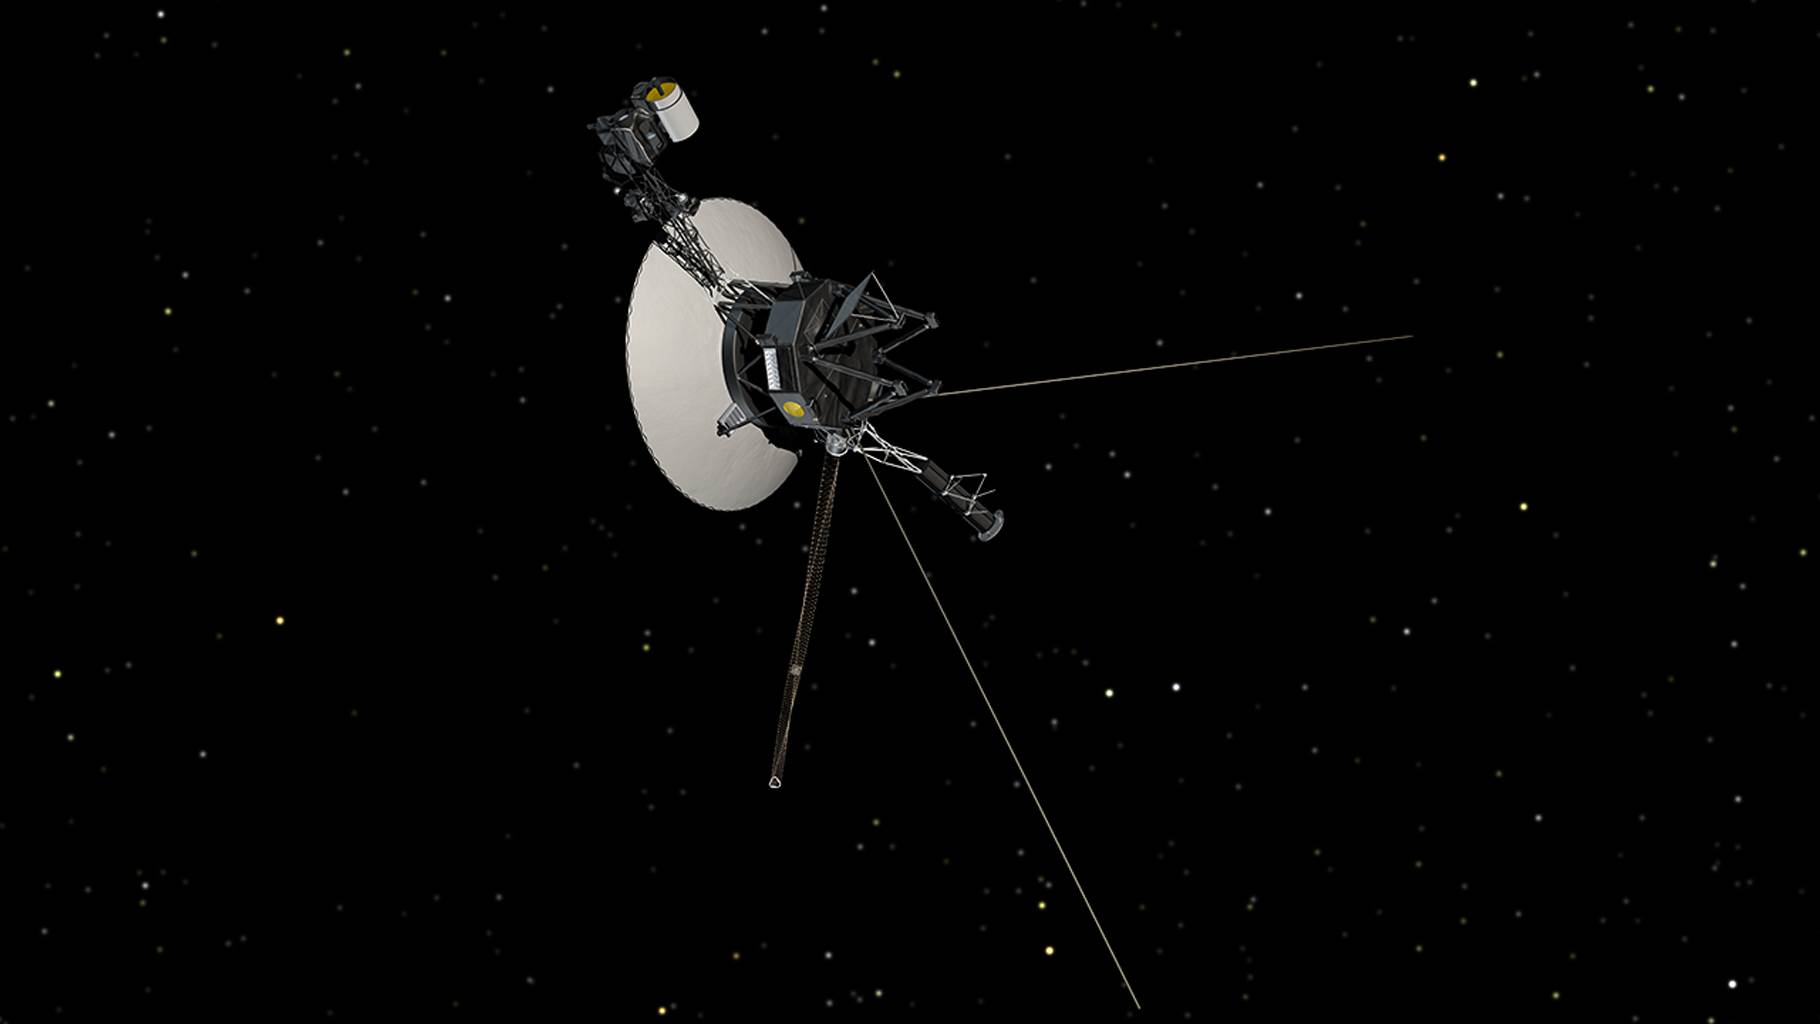  Voyager 1 slike 1.jpg - NASA 